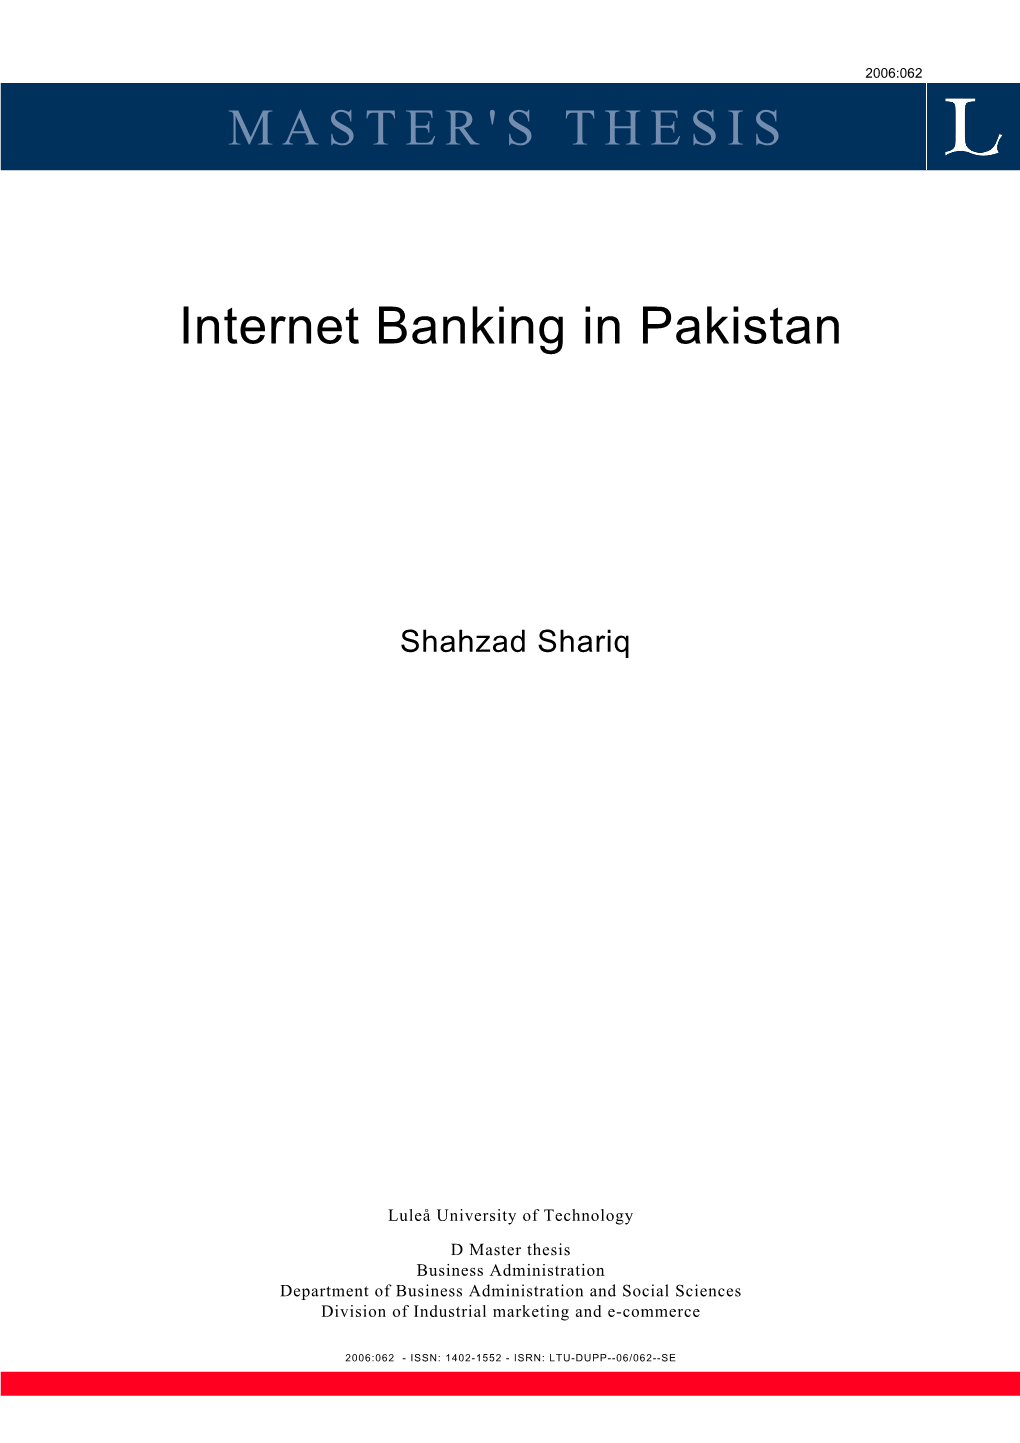 Internet Banking in Pakistan